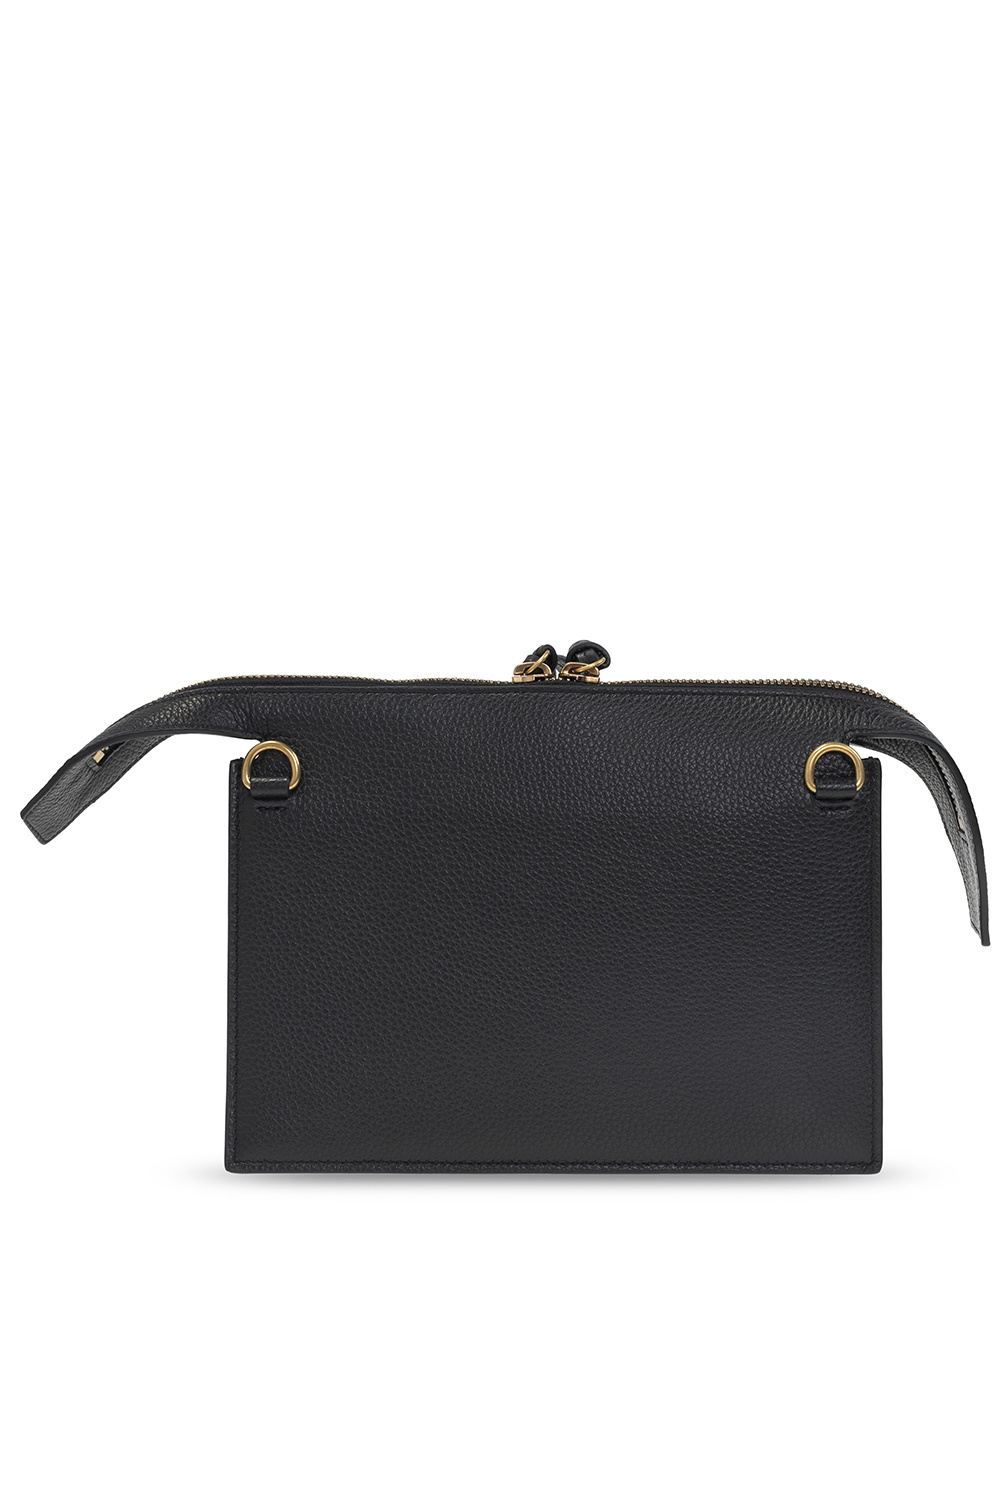 Balenciaga ‘Neo Classic’ shoulder Commovente bag